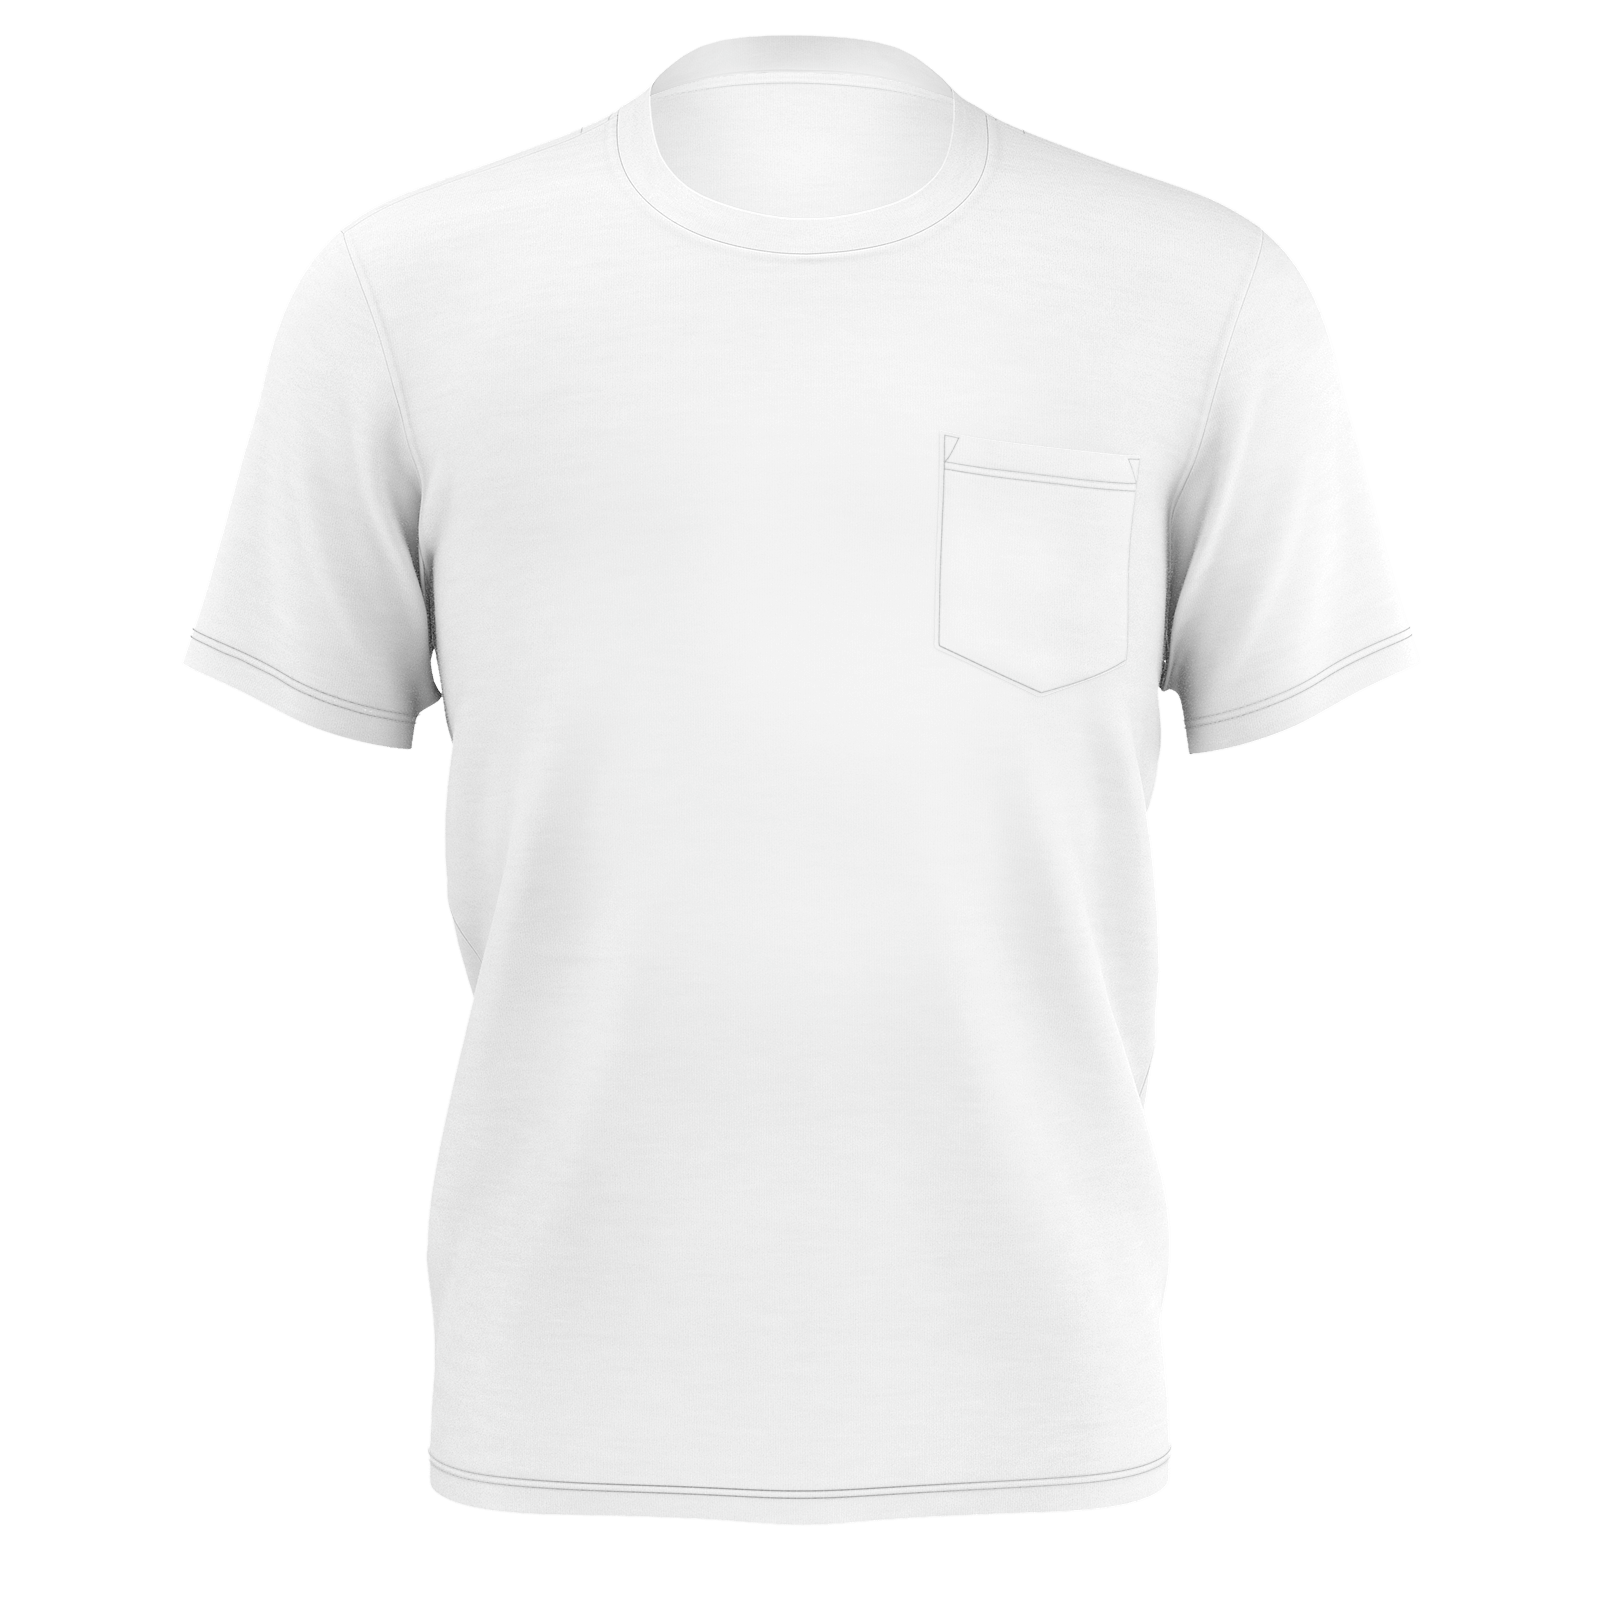 Men's Pocket T-shirt